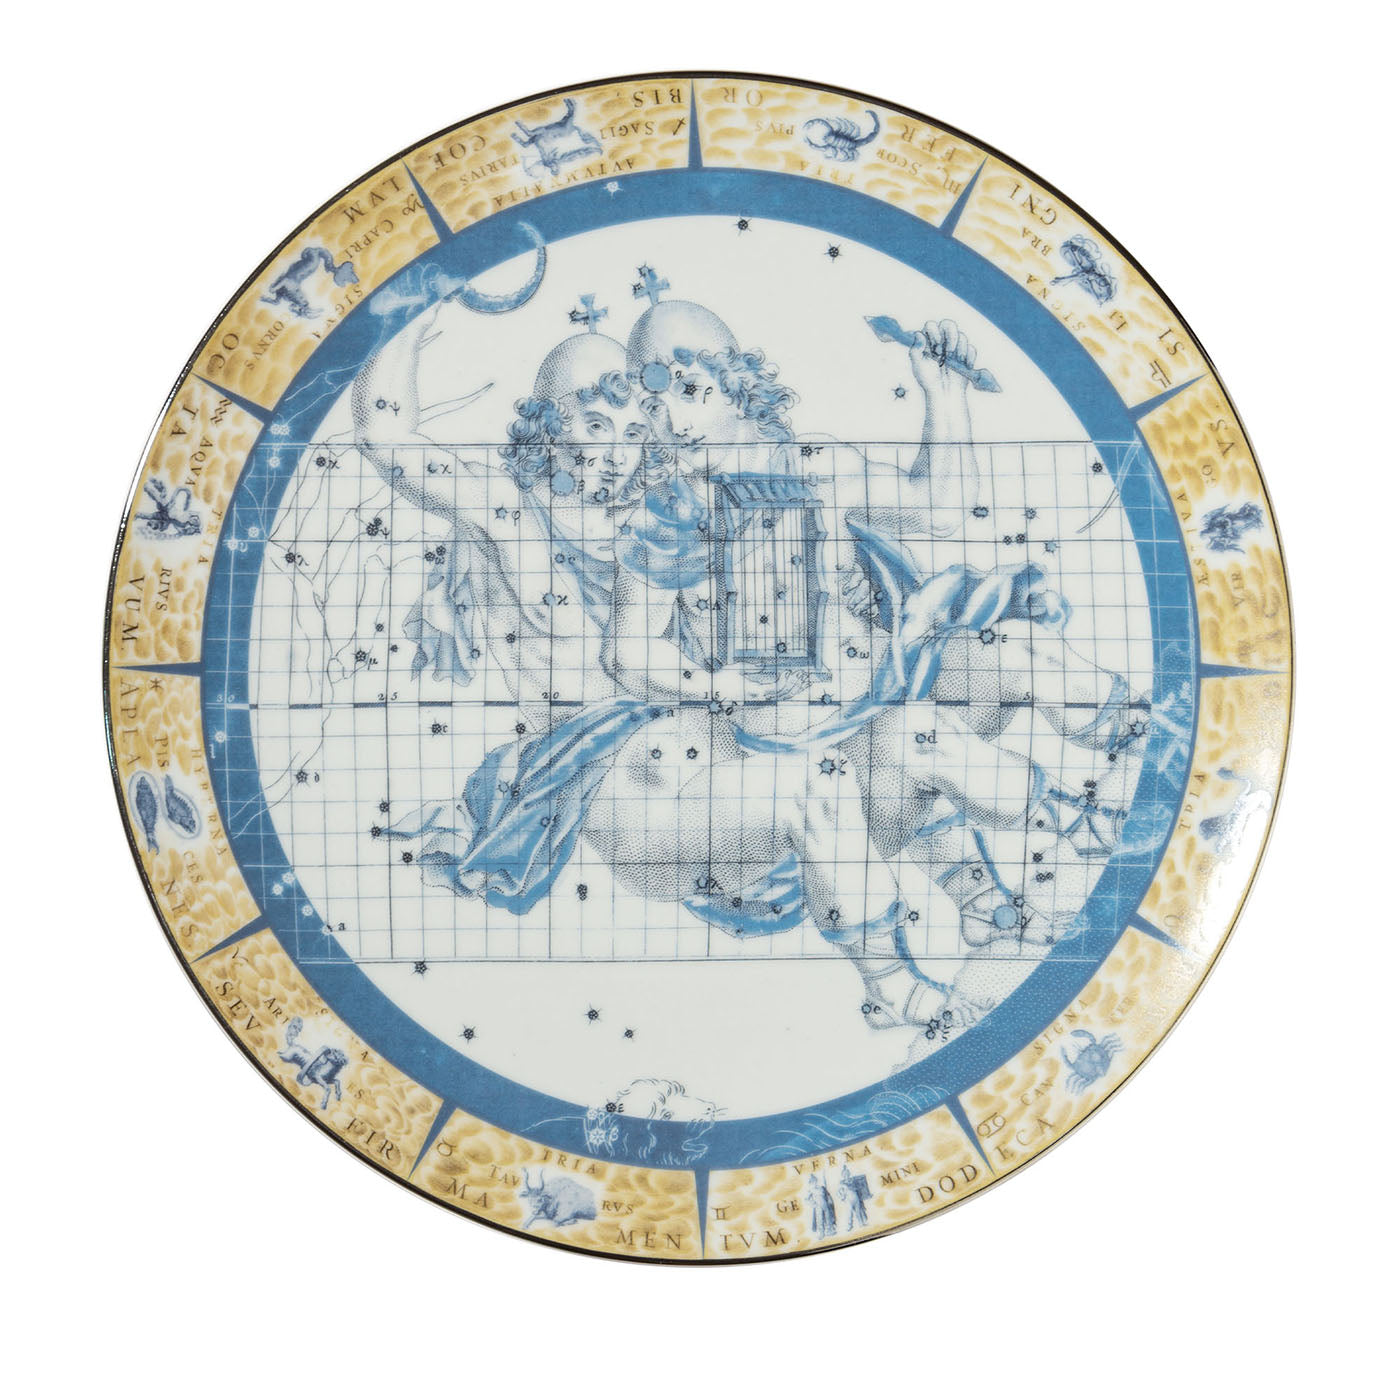 Zodiacus Gemini decorative porcelain plate - Main view